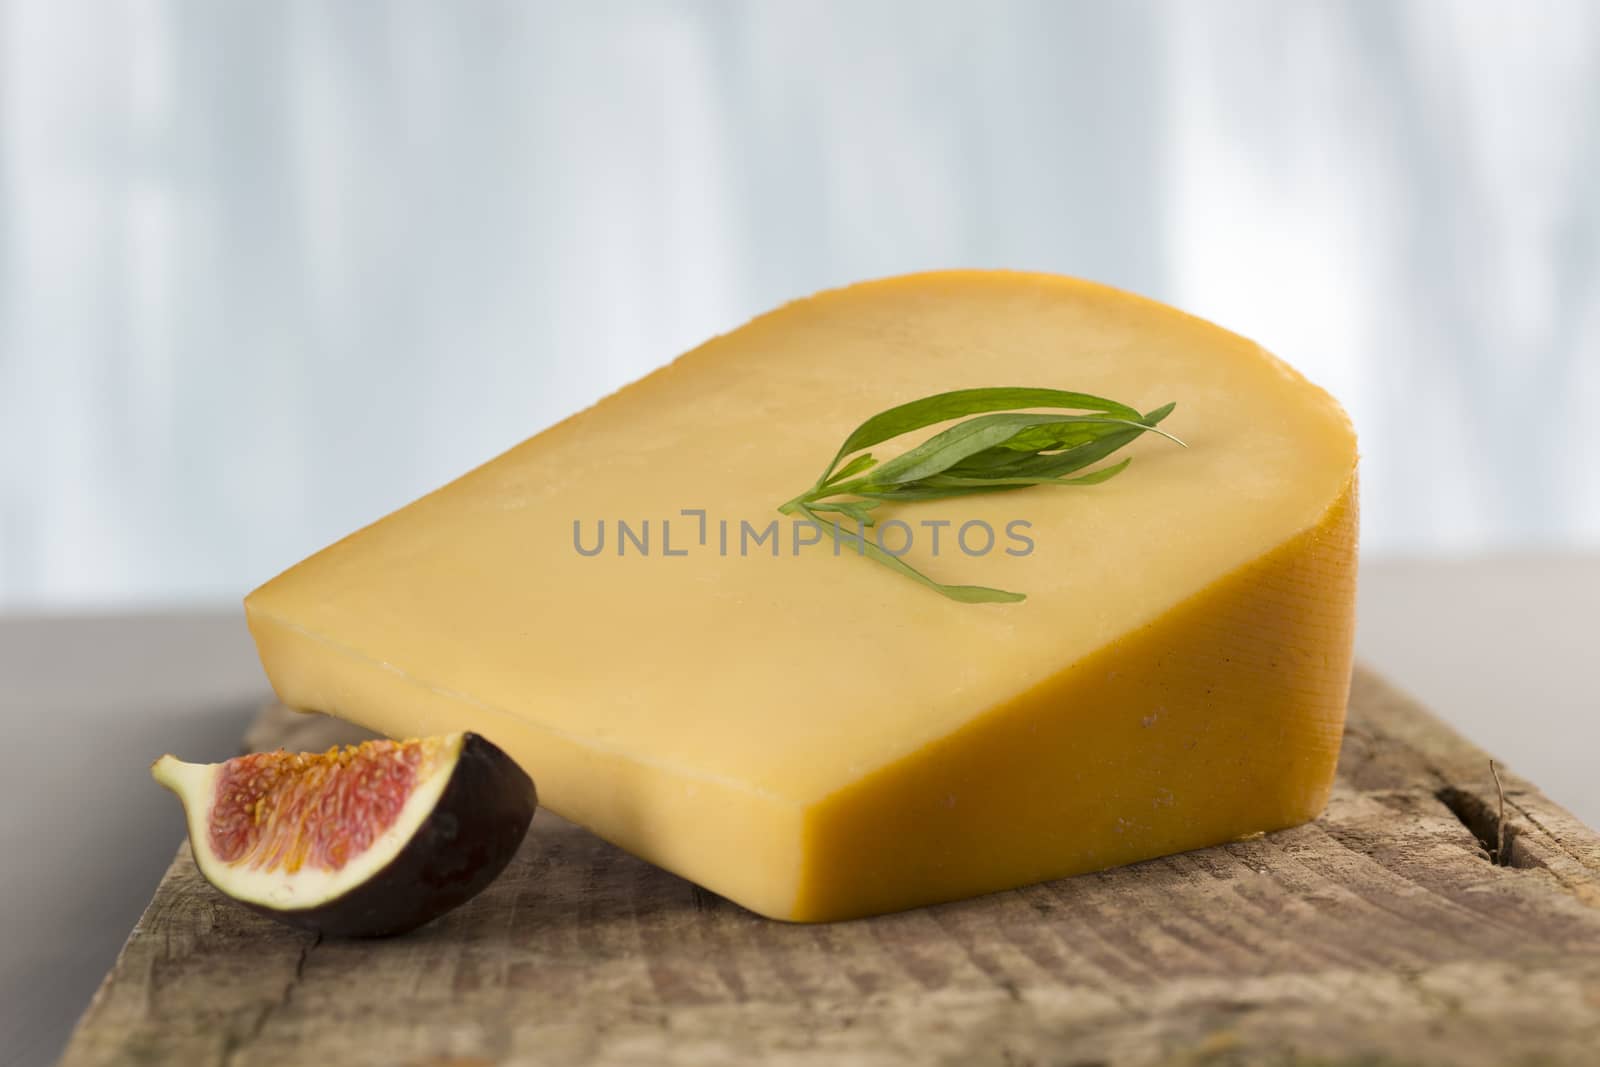 Traditional Hollander cheese -  Gouda